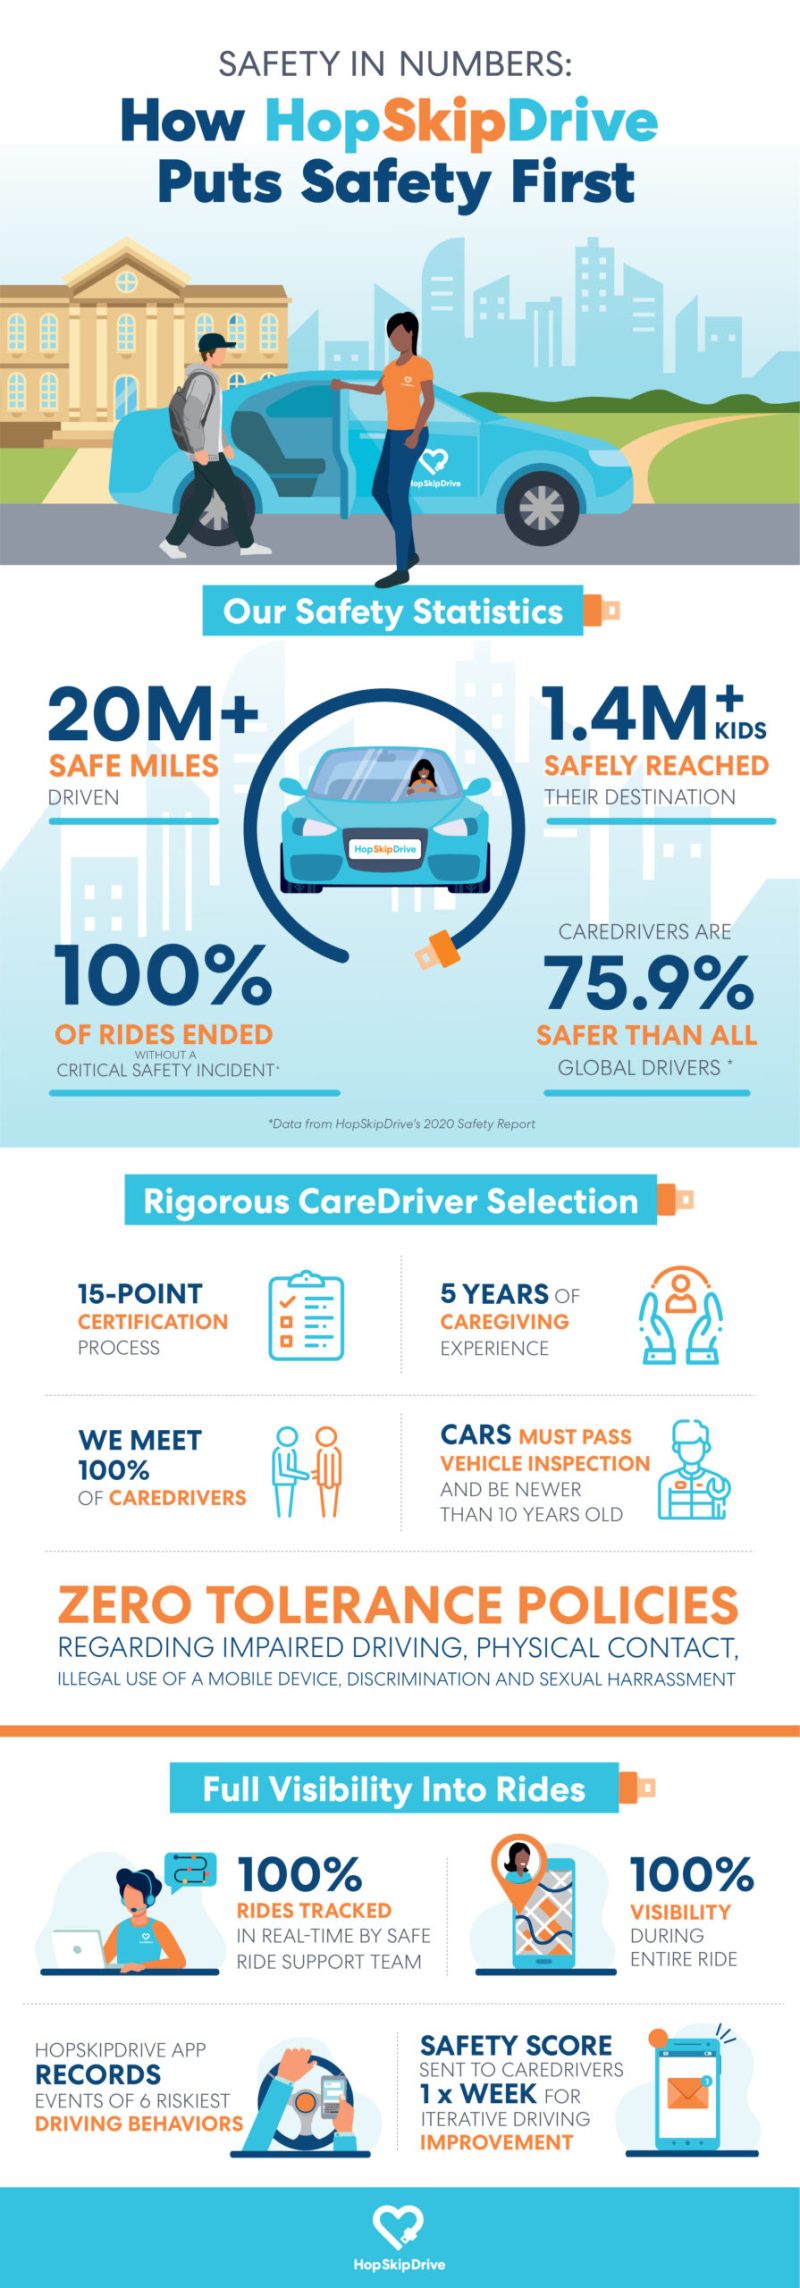 HopSkipDrive Safety Infographic 12-7-21